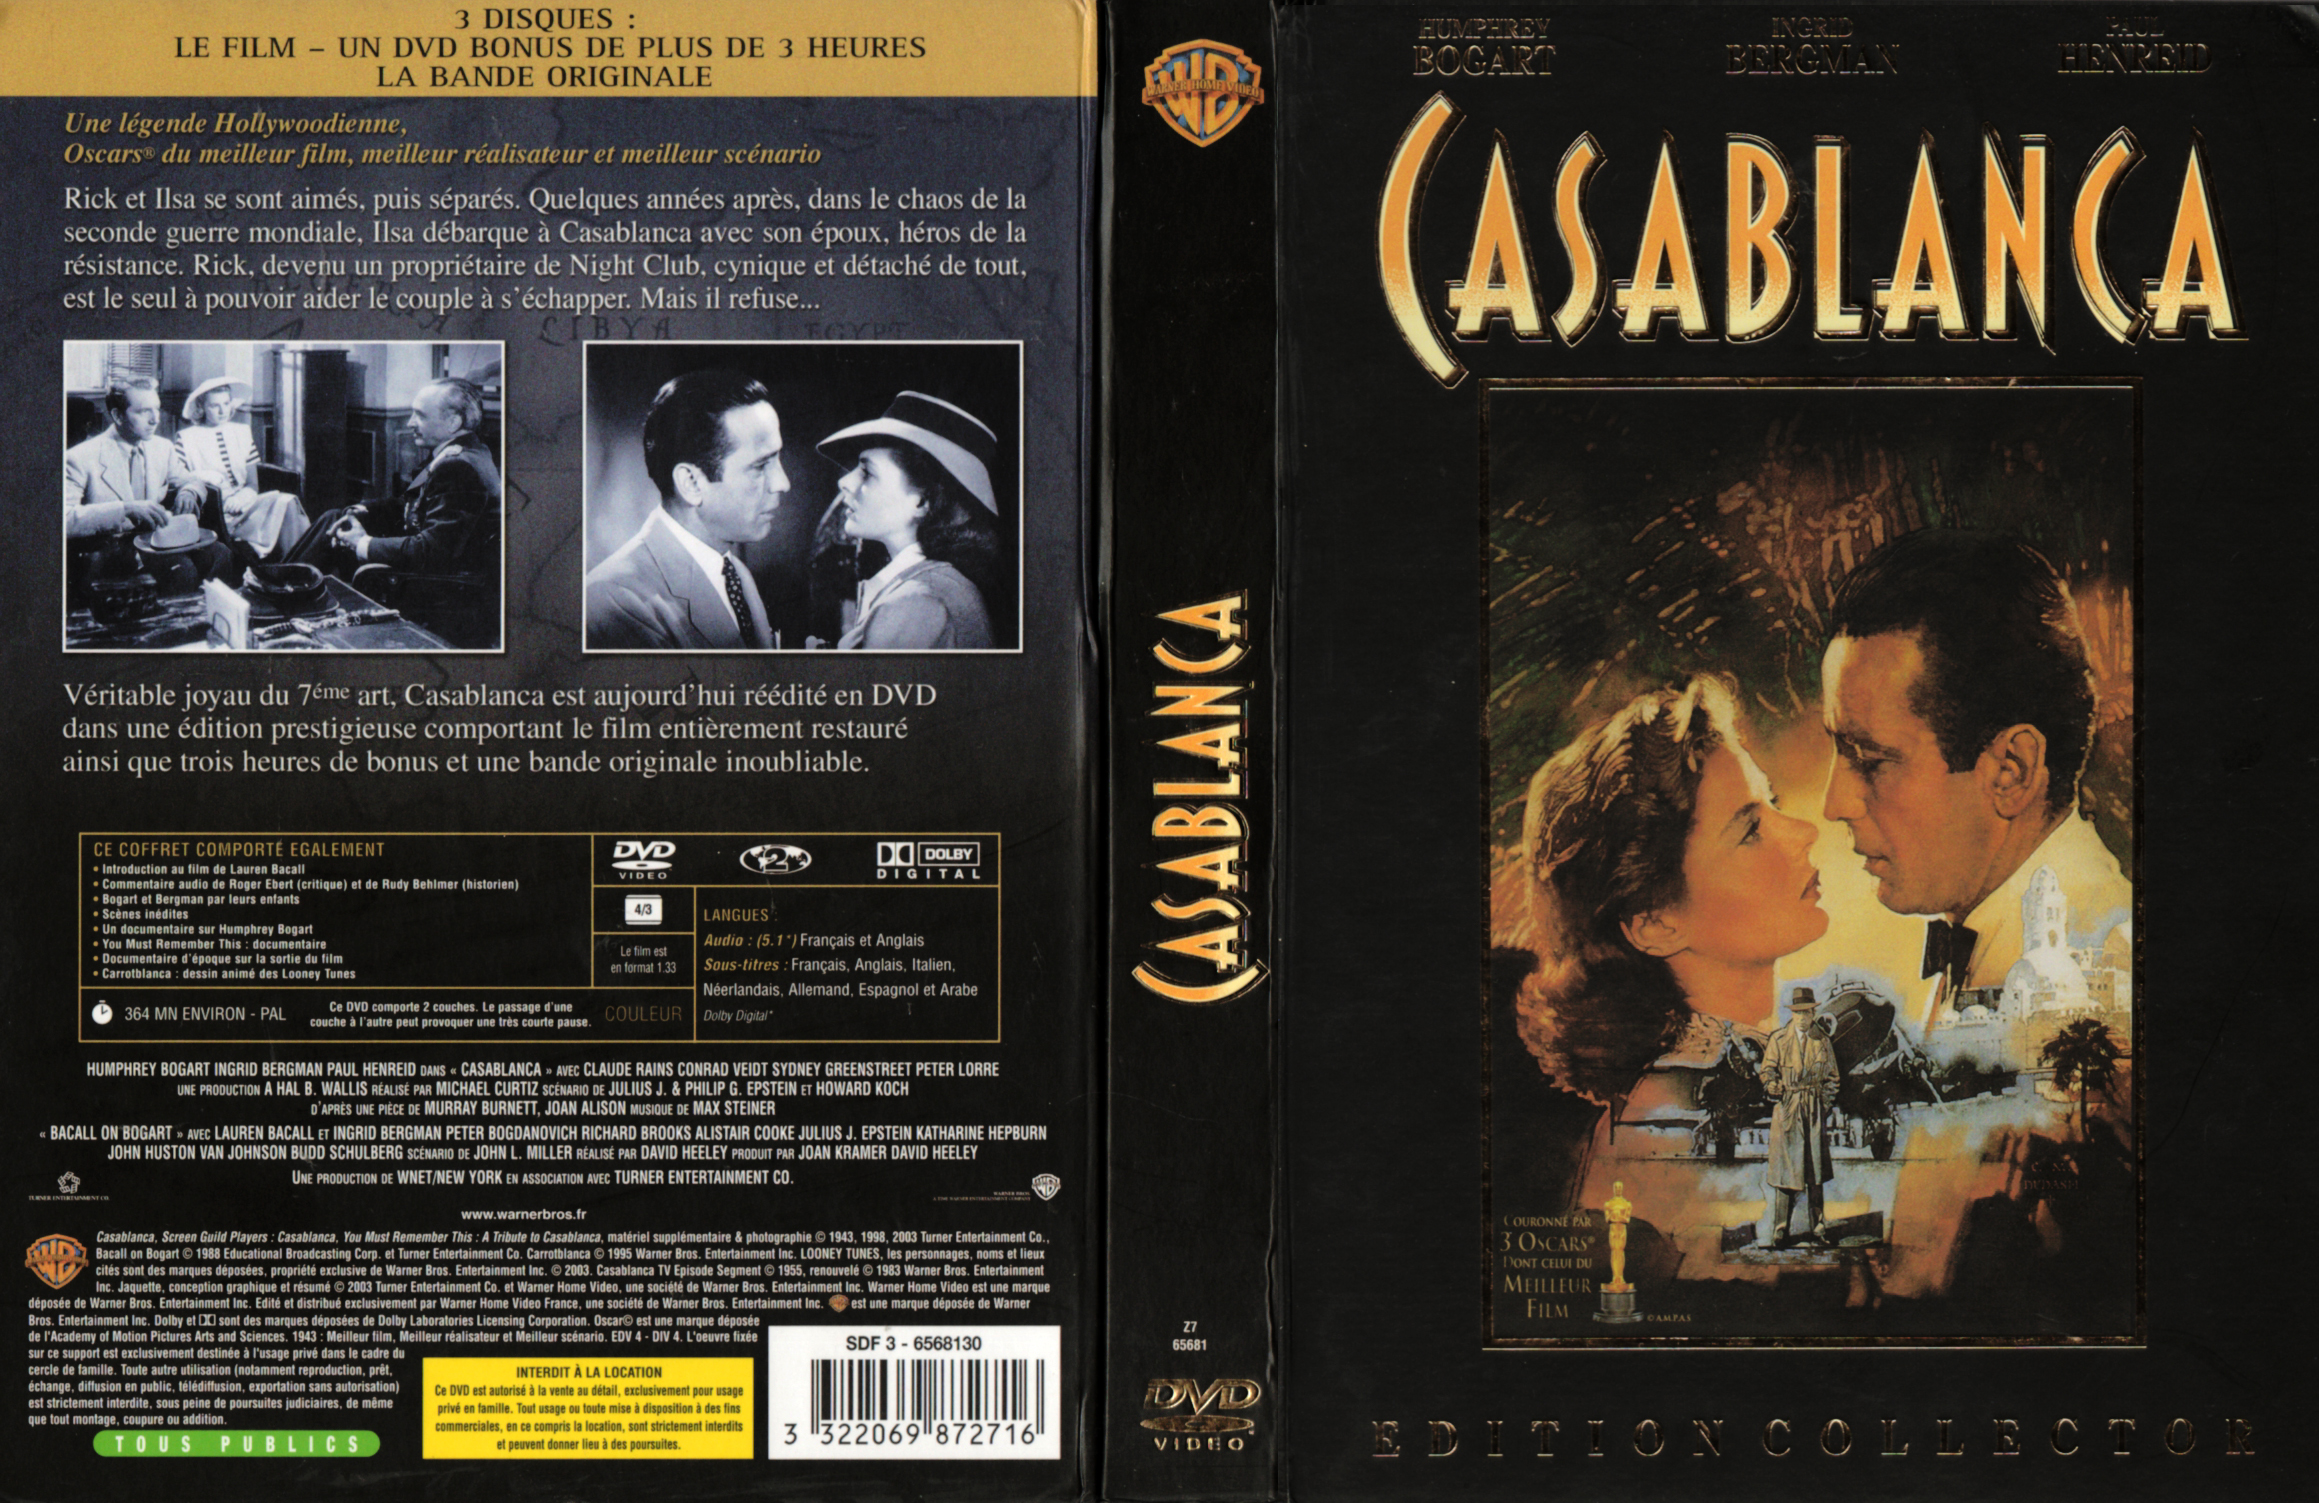 Jaquette DVD Casablanca v3